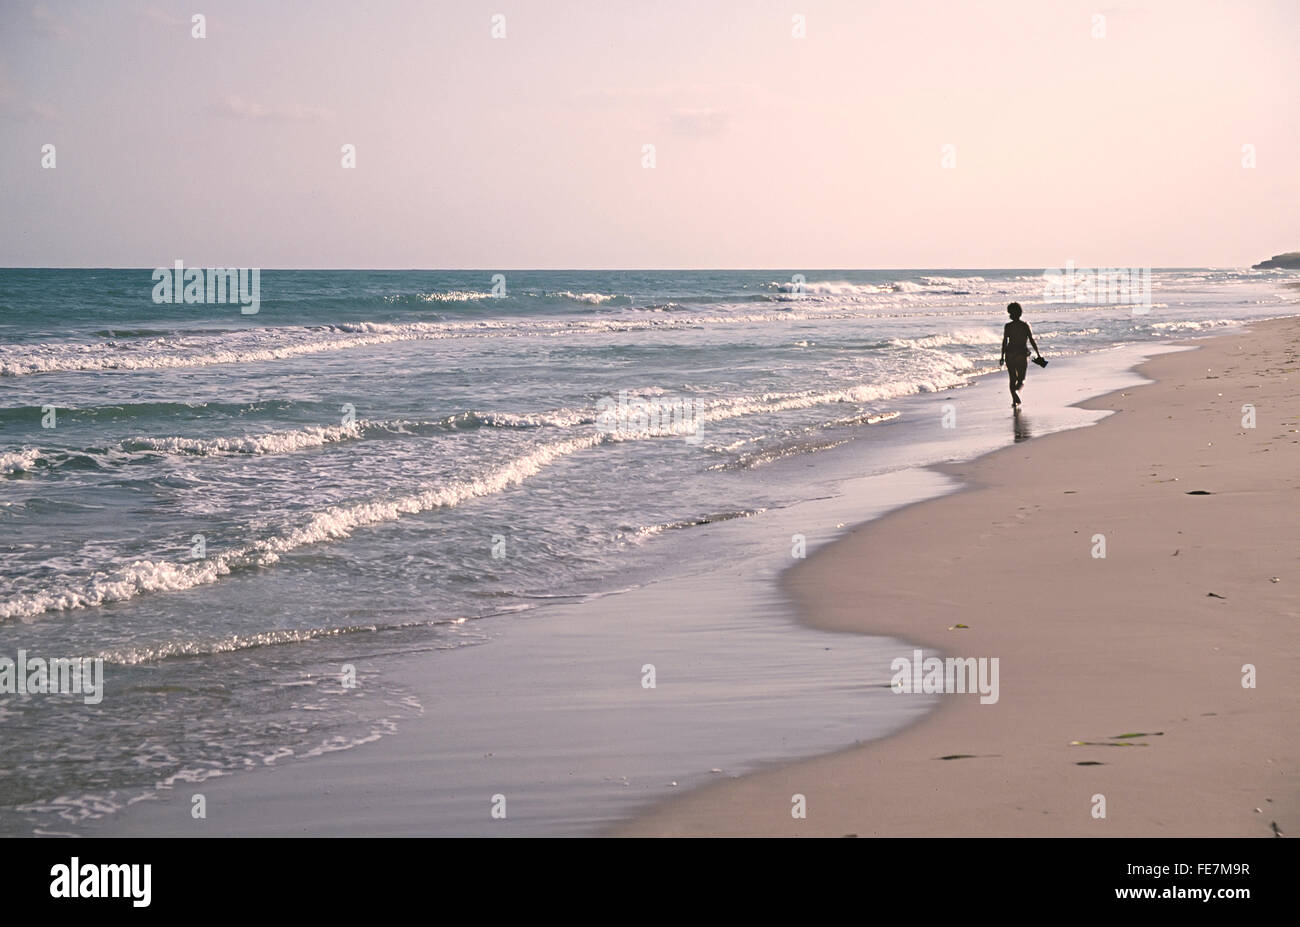 Person walking on beach, Cuba Stock Photo